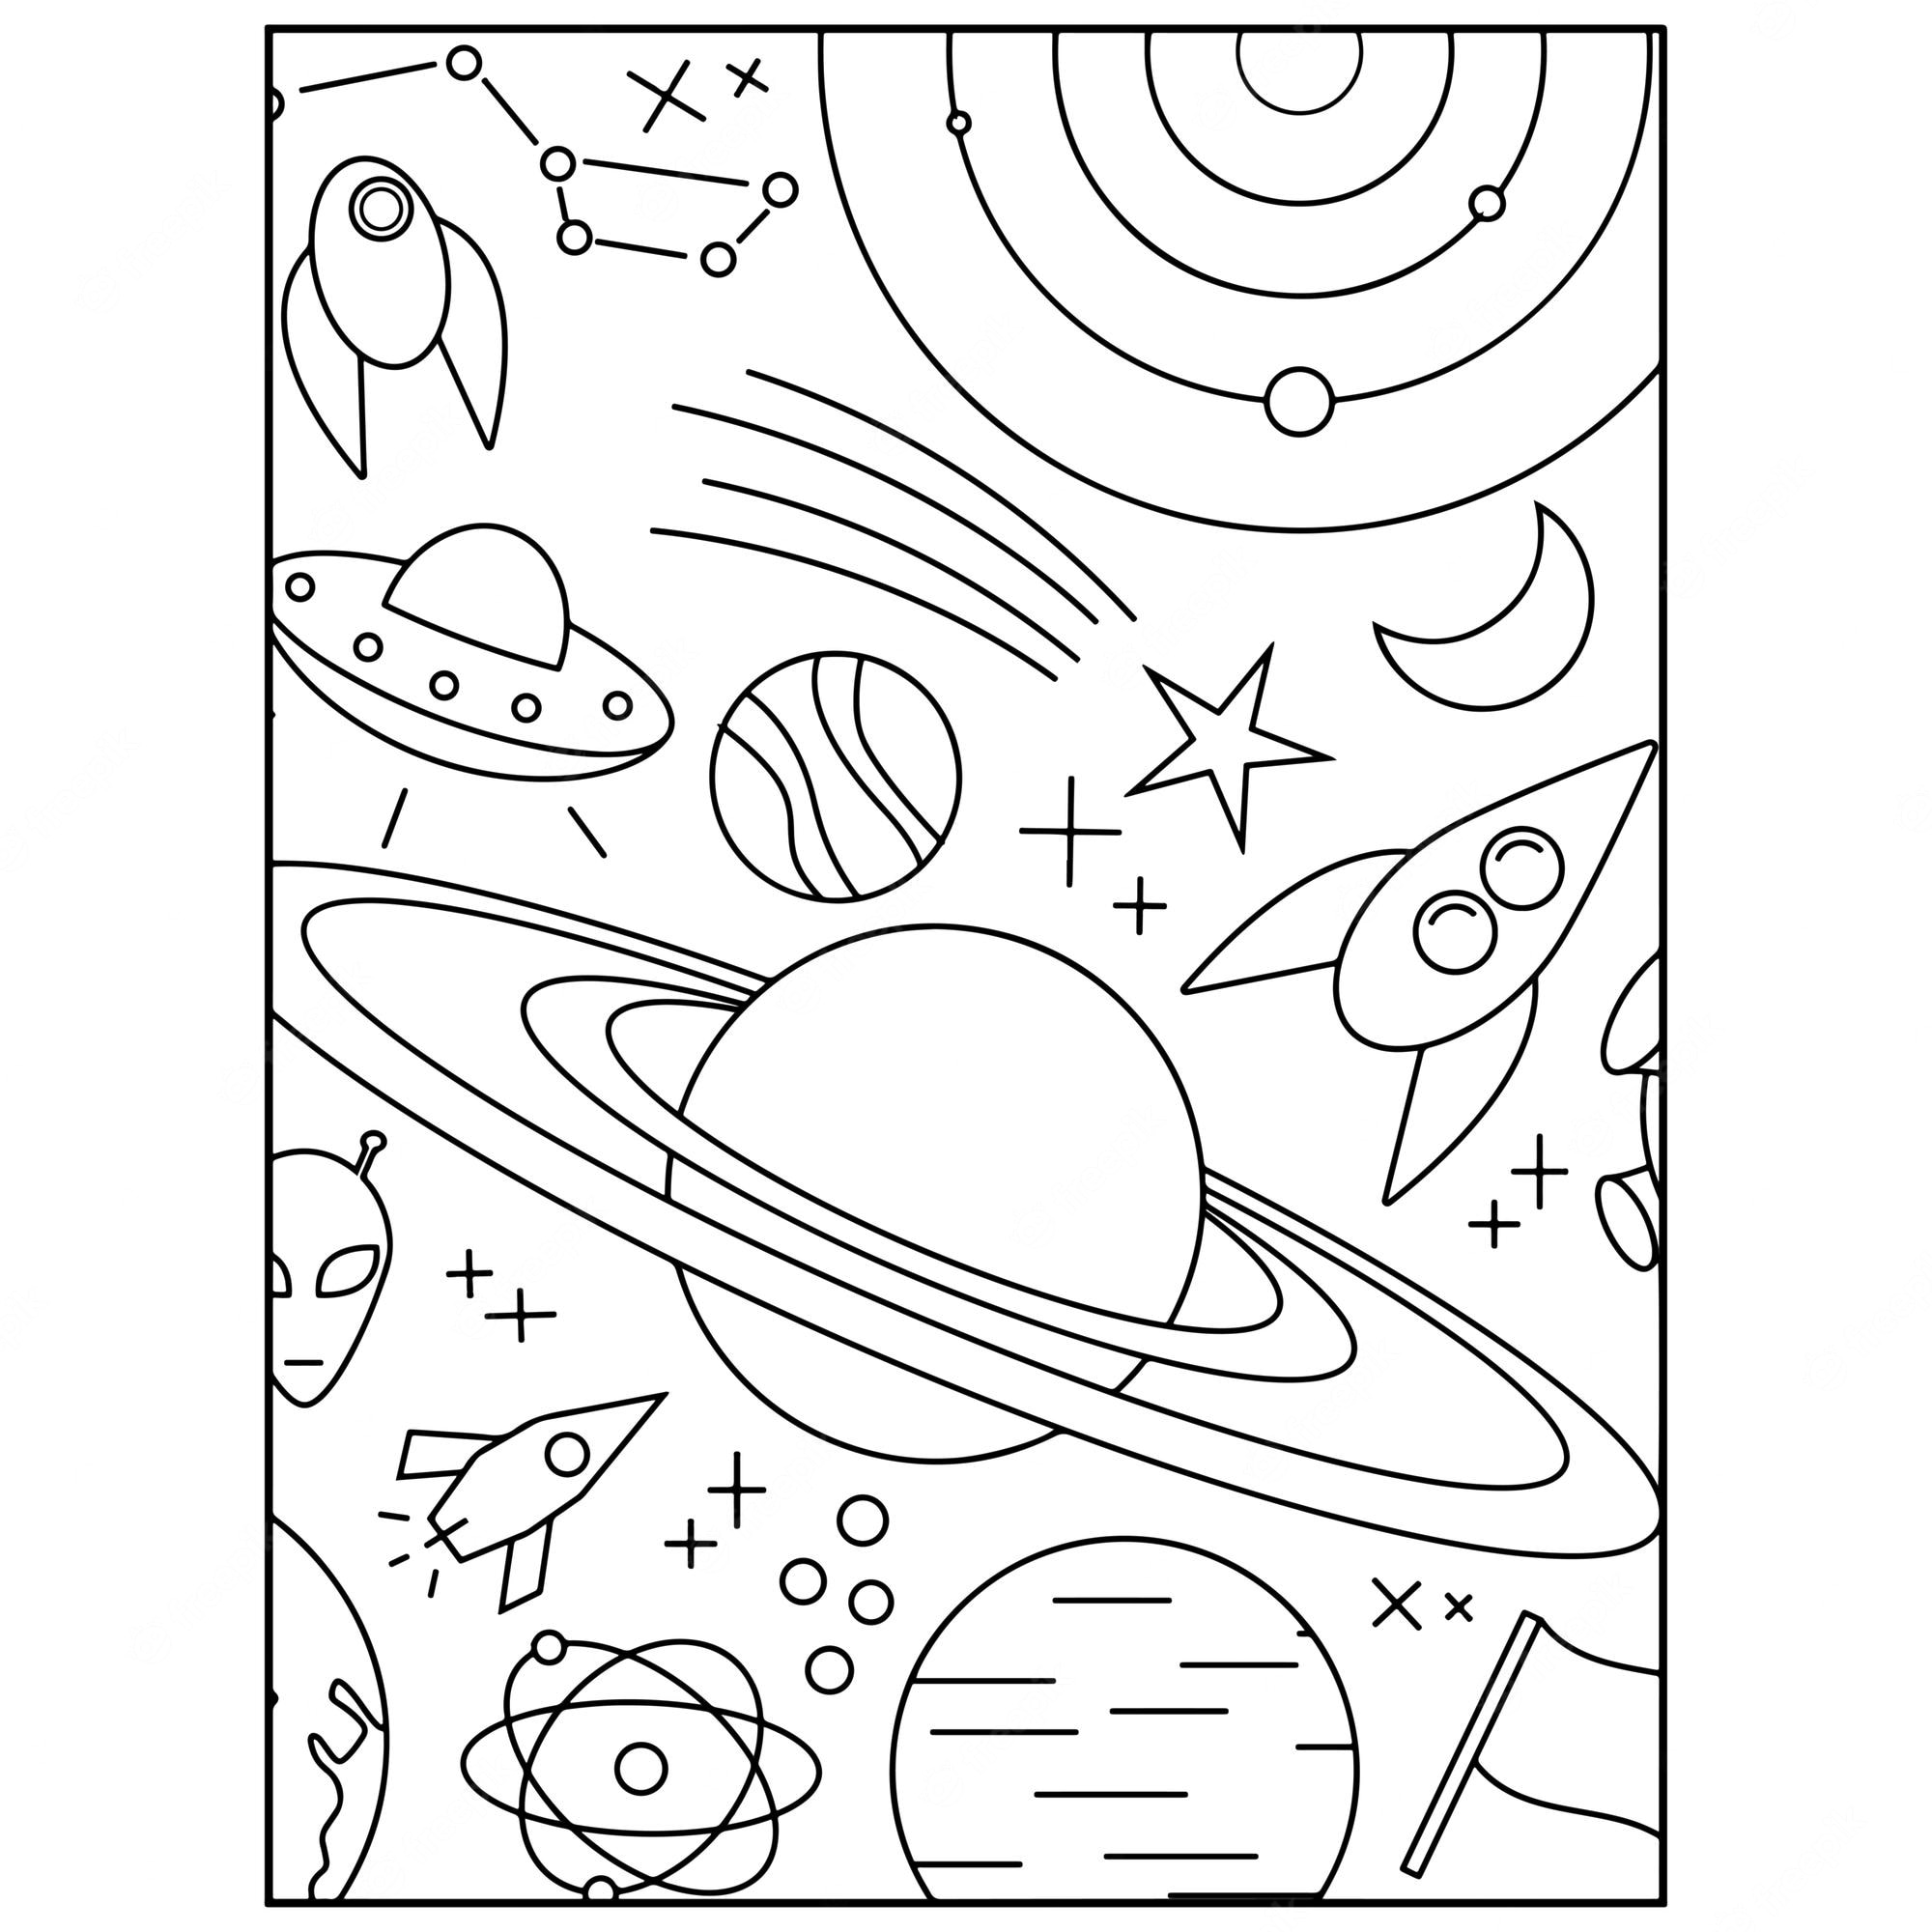 Space coloring pages for kids premium - SheetalColor.com